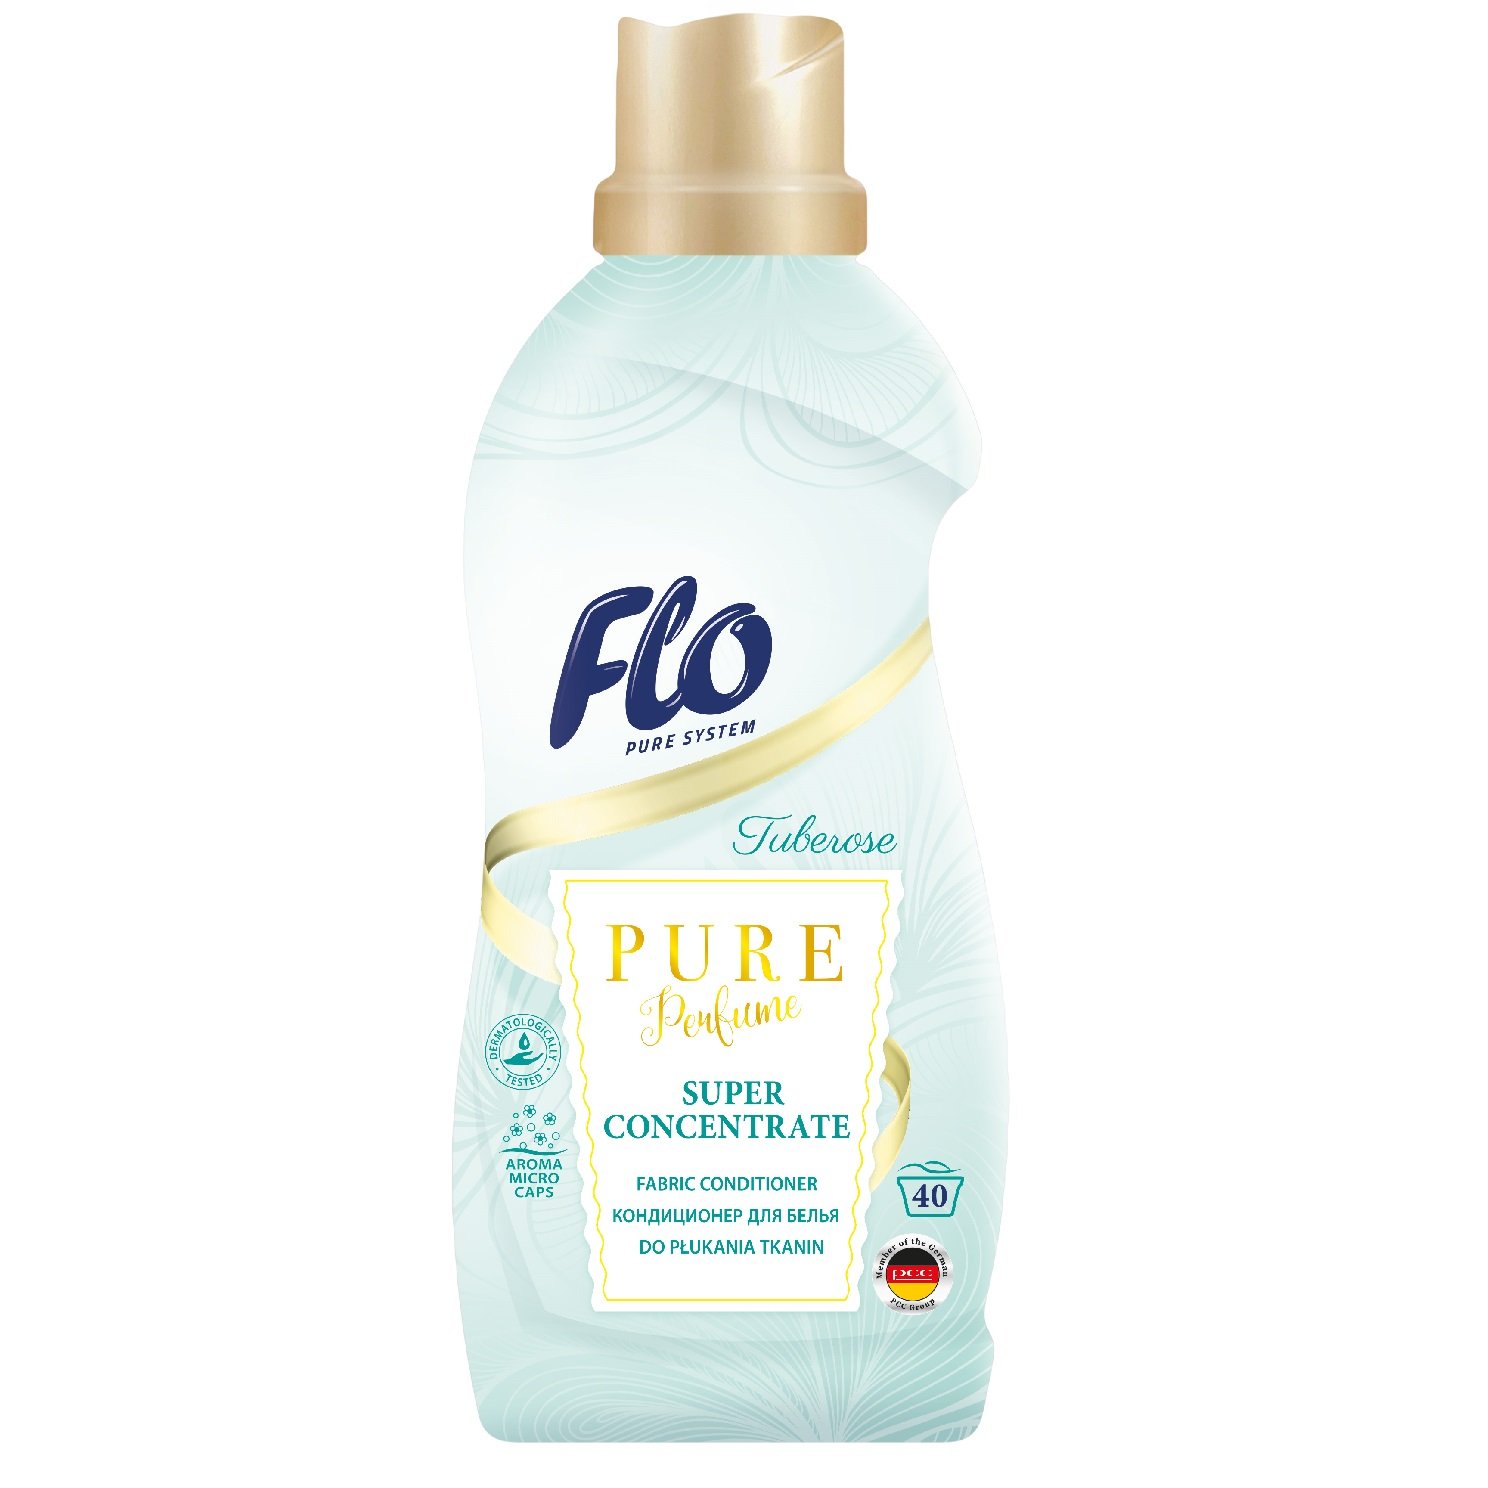 Кондиционер для белья Flo Pure Perfume Tuberoza, концентрат, 1 л - фото 1